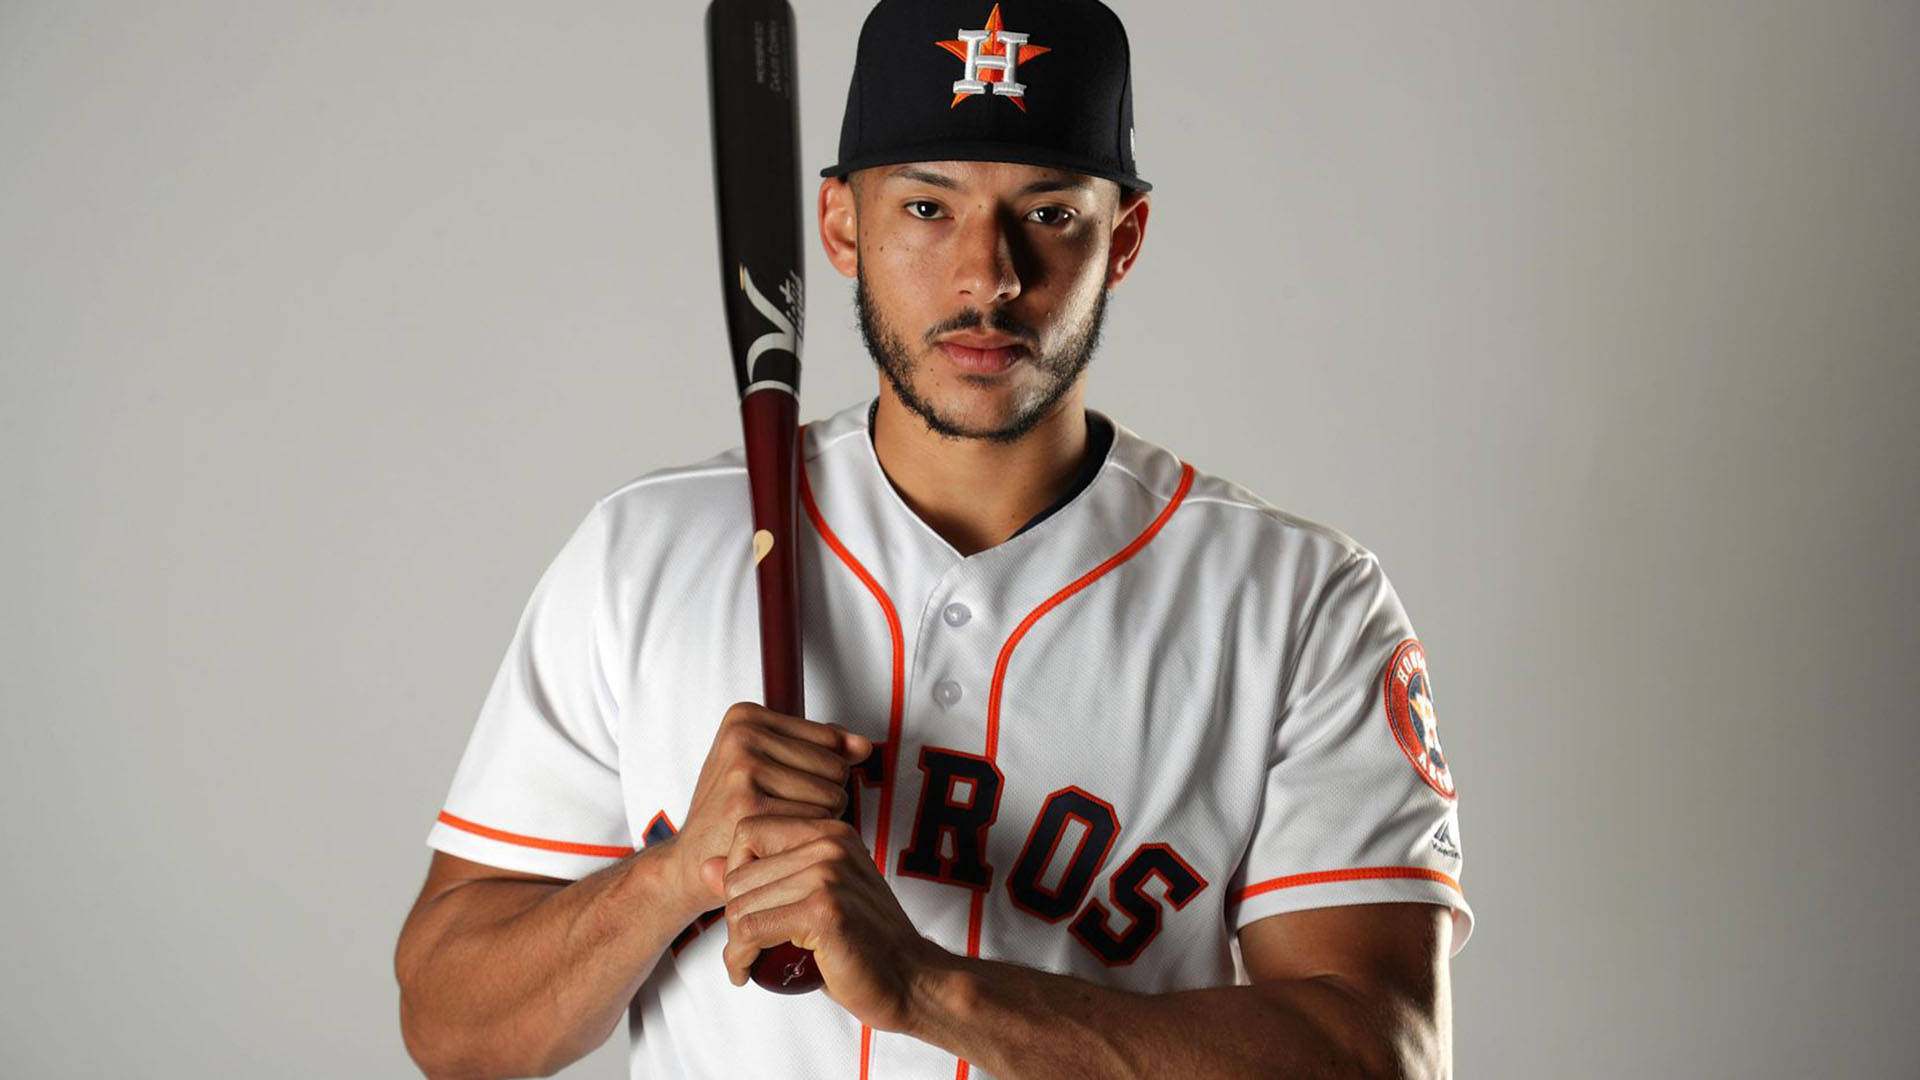 Carlos Correa Baseball Player Background